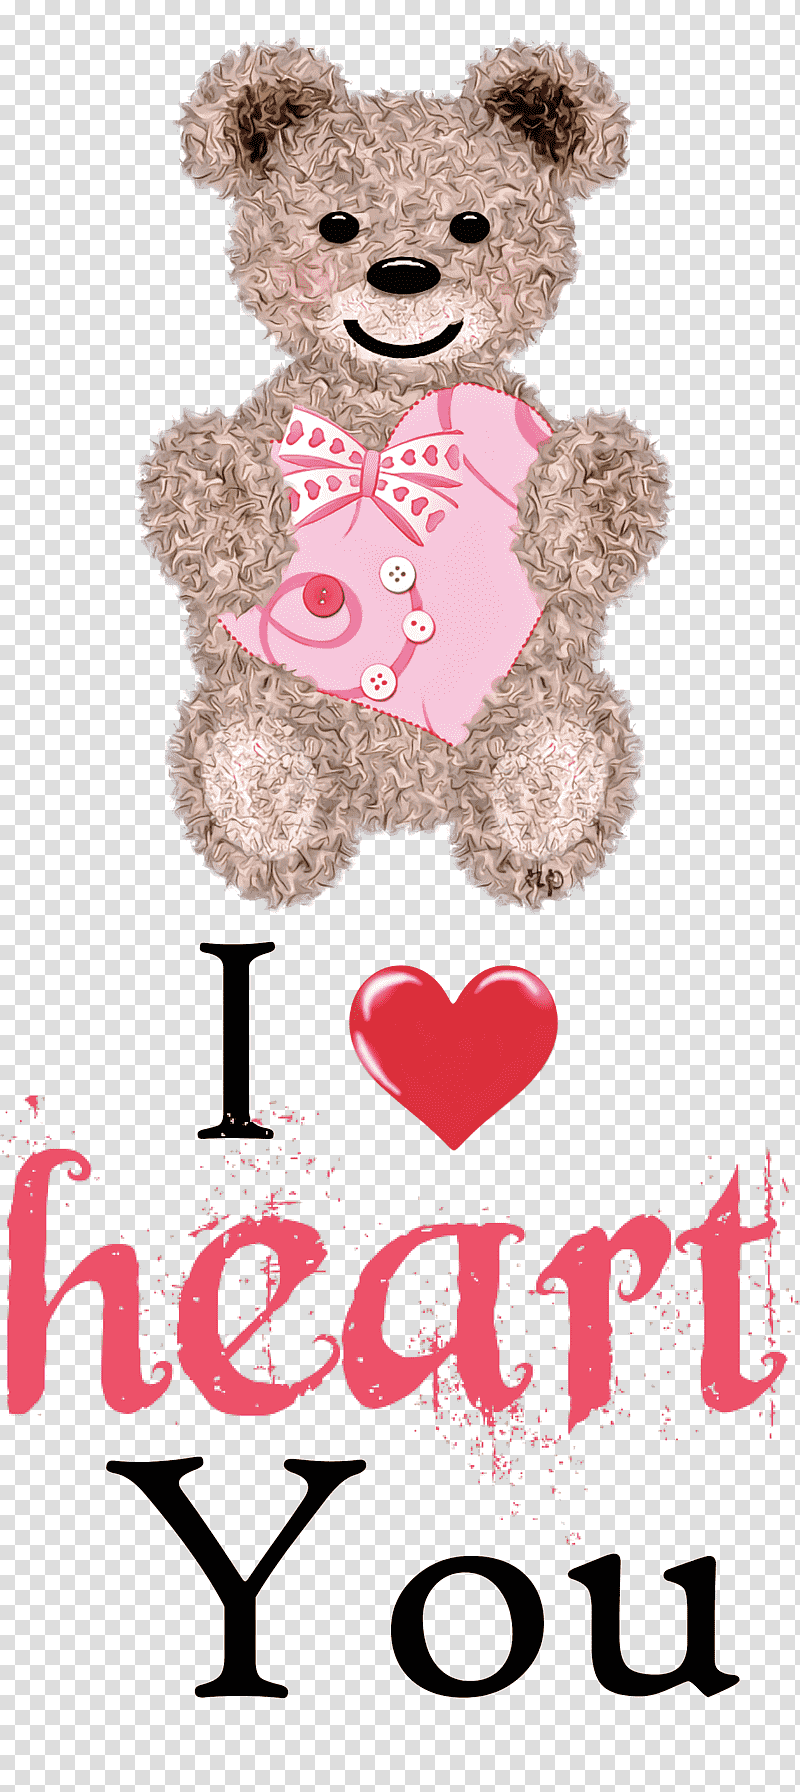 I Heart You Valentines Day Love, Teddy Bear, Magic Kingdom Park, Stuffed Toy, Bears, Walt Disney Company, Mickeys Notsoscary Halloween Party transparent background PNG clipart